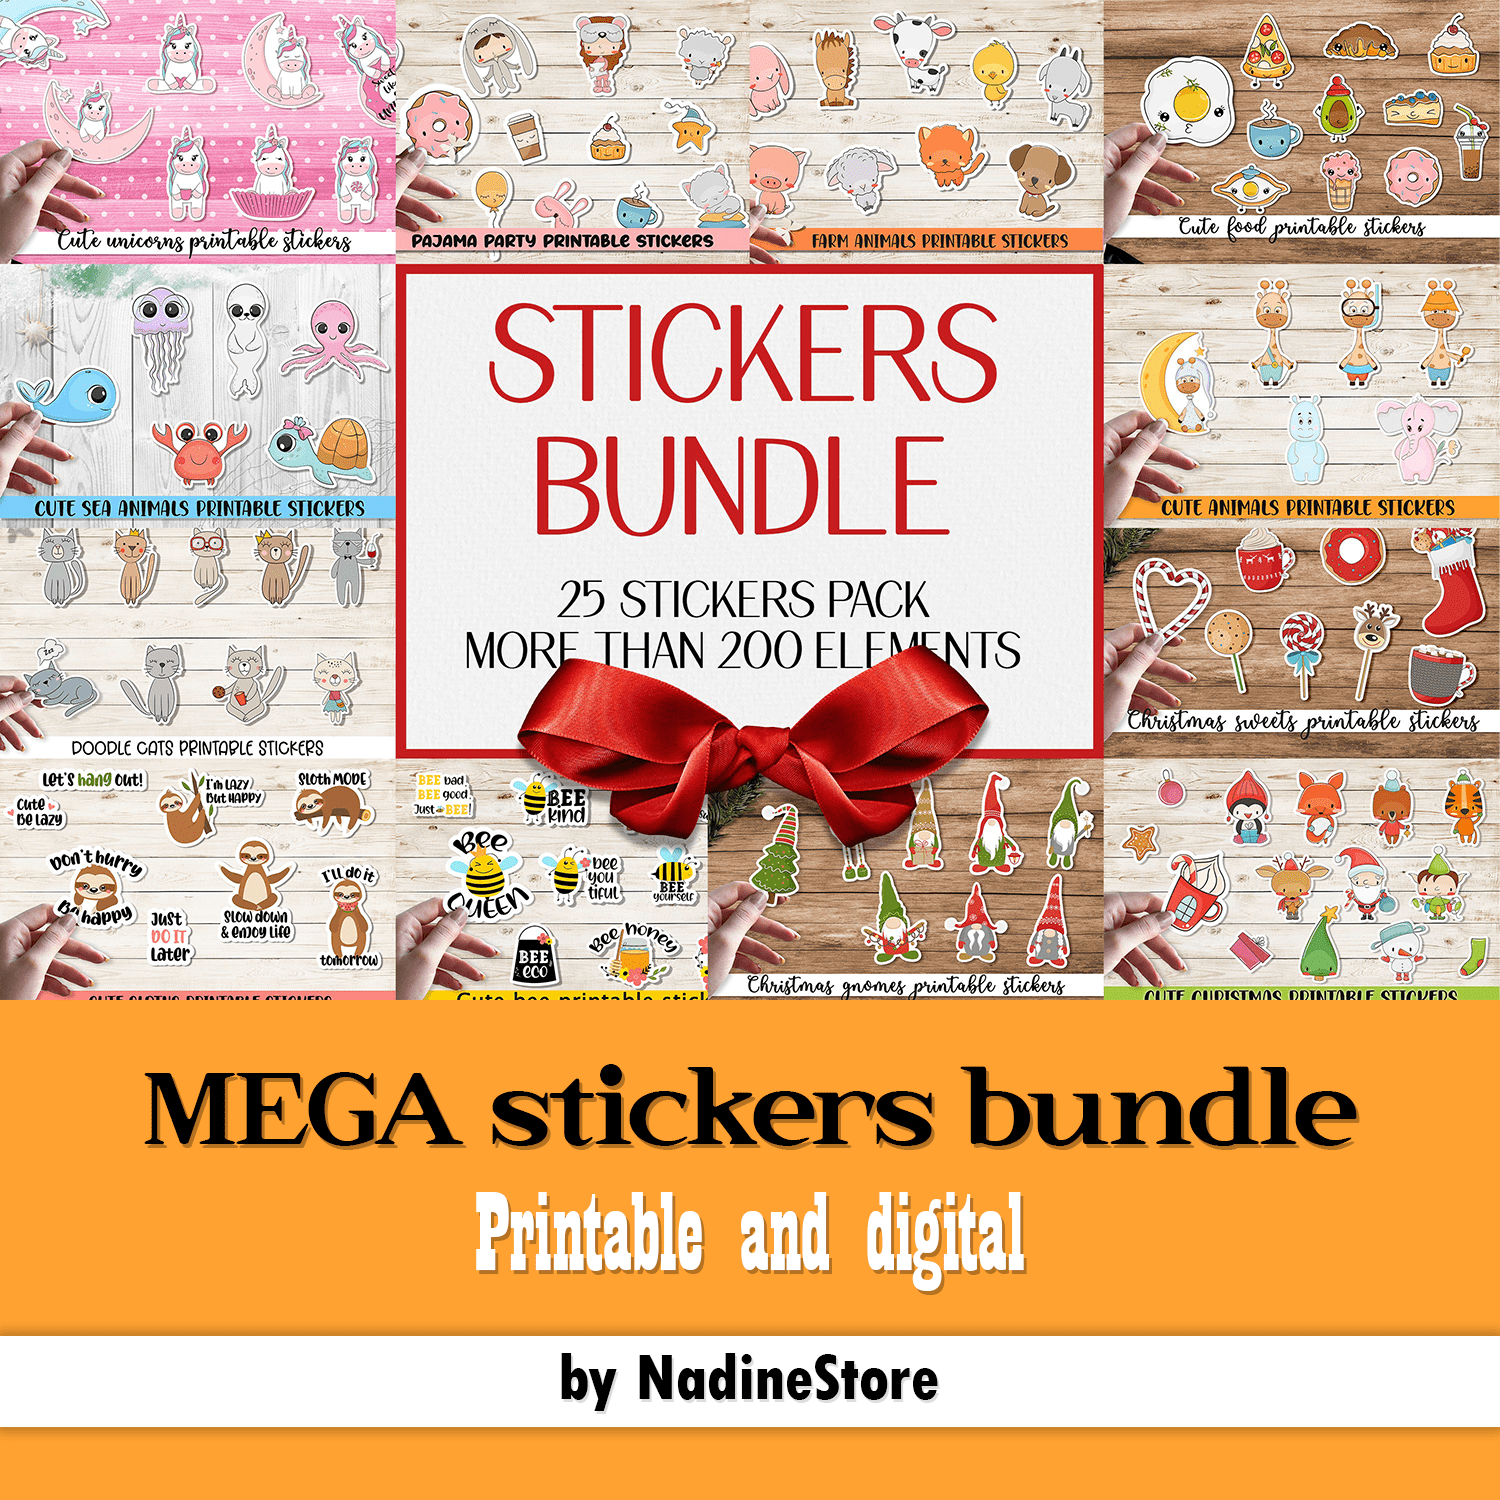 MEGA stickers bundle - main image preview.